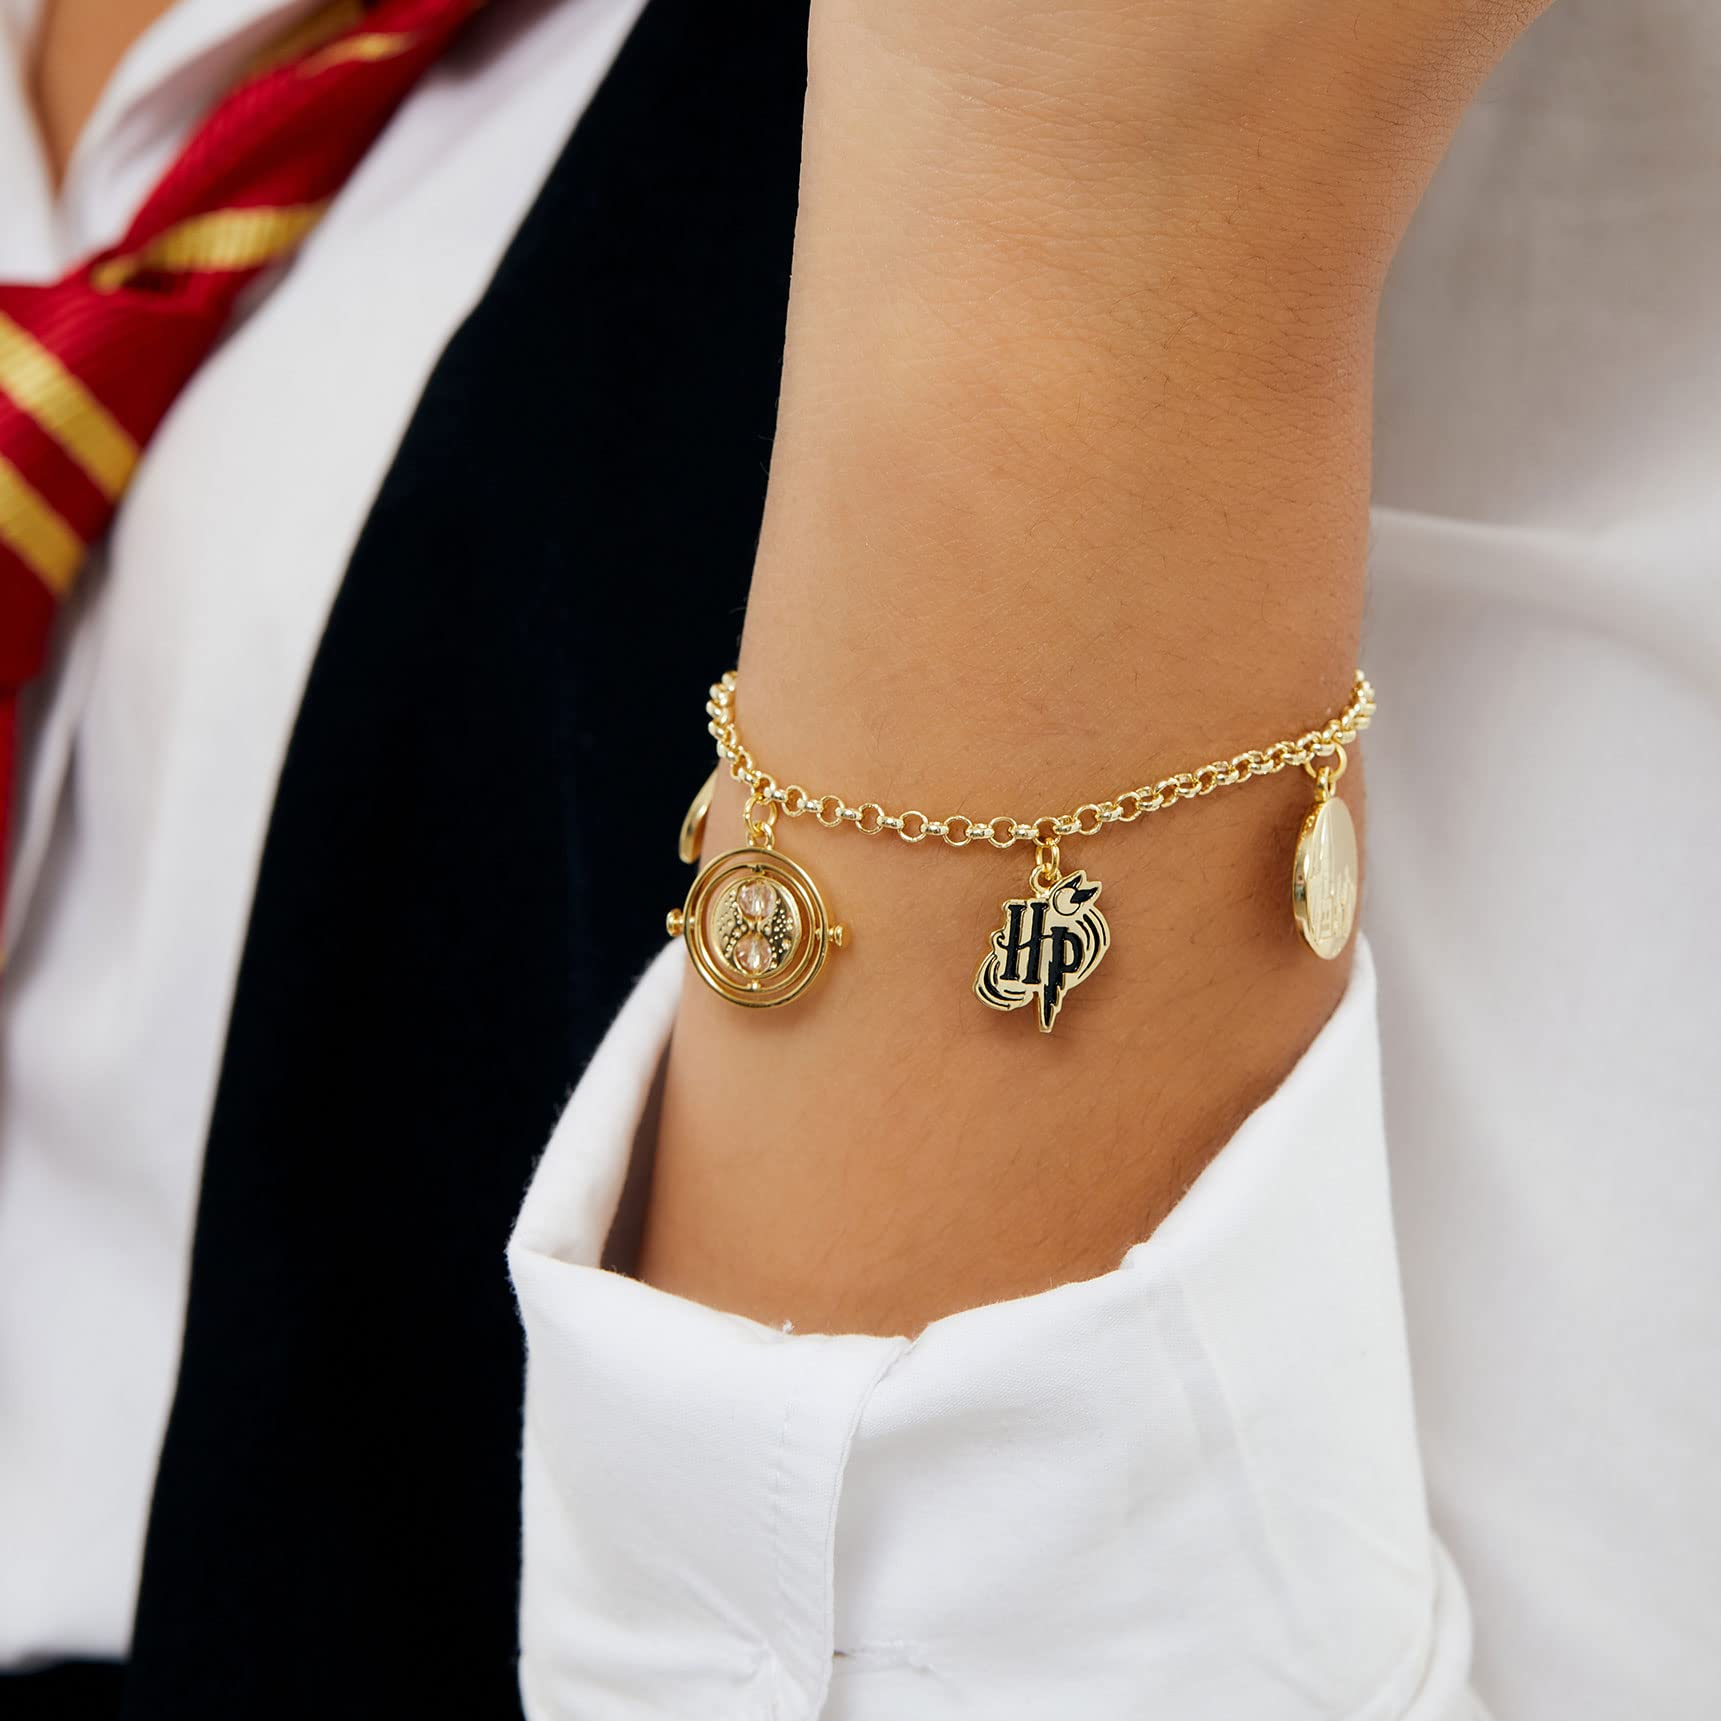 Harry Potter Womens Charm Bracelets - 7-inch Bracelet Charms Jewelry